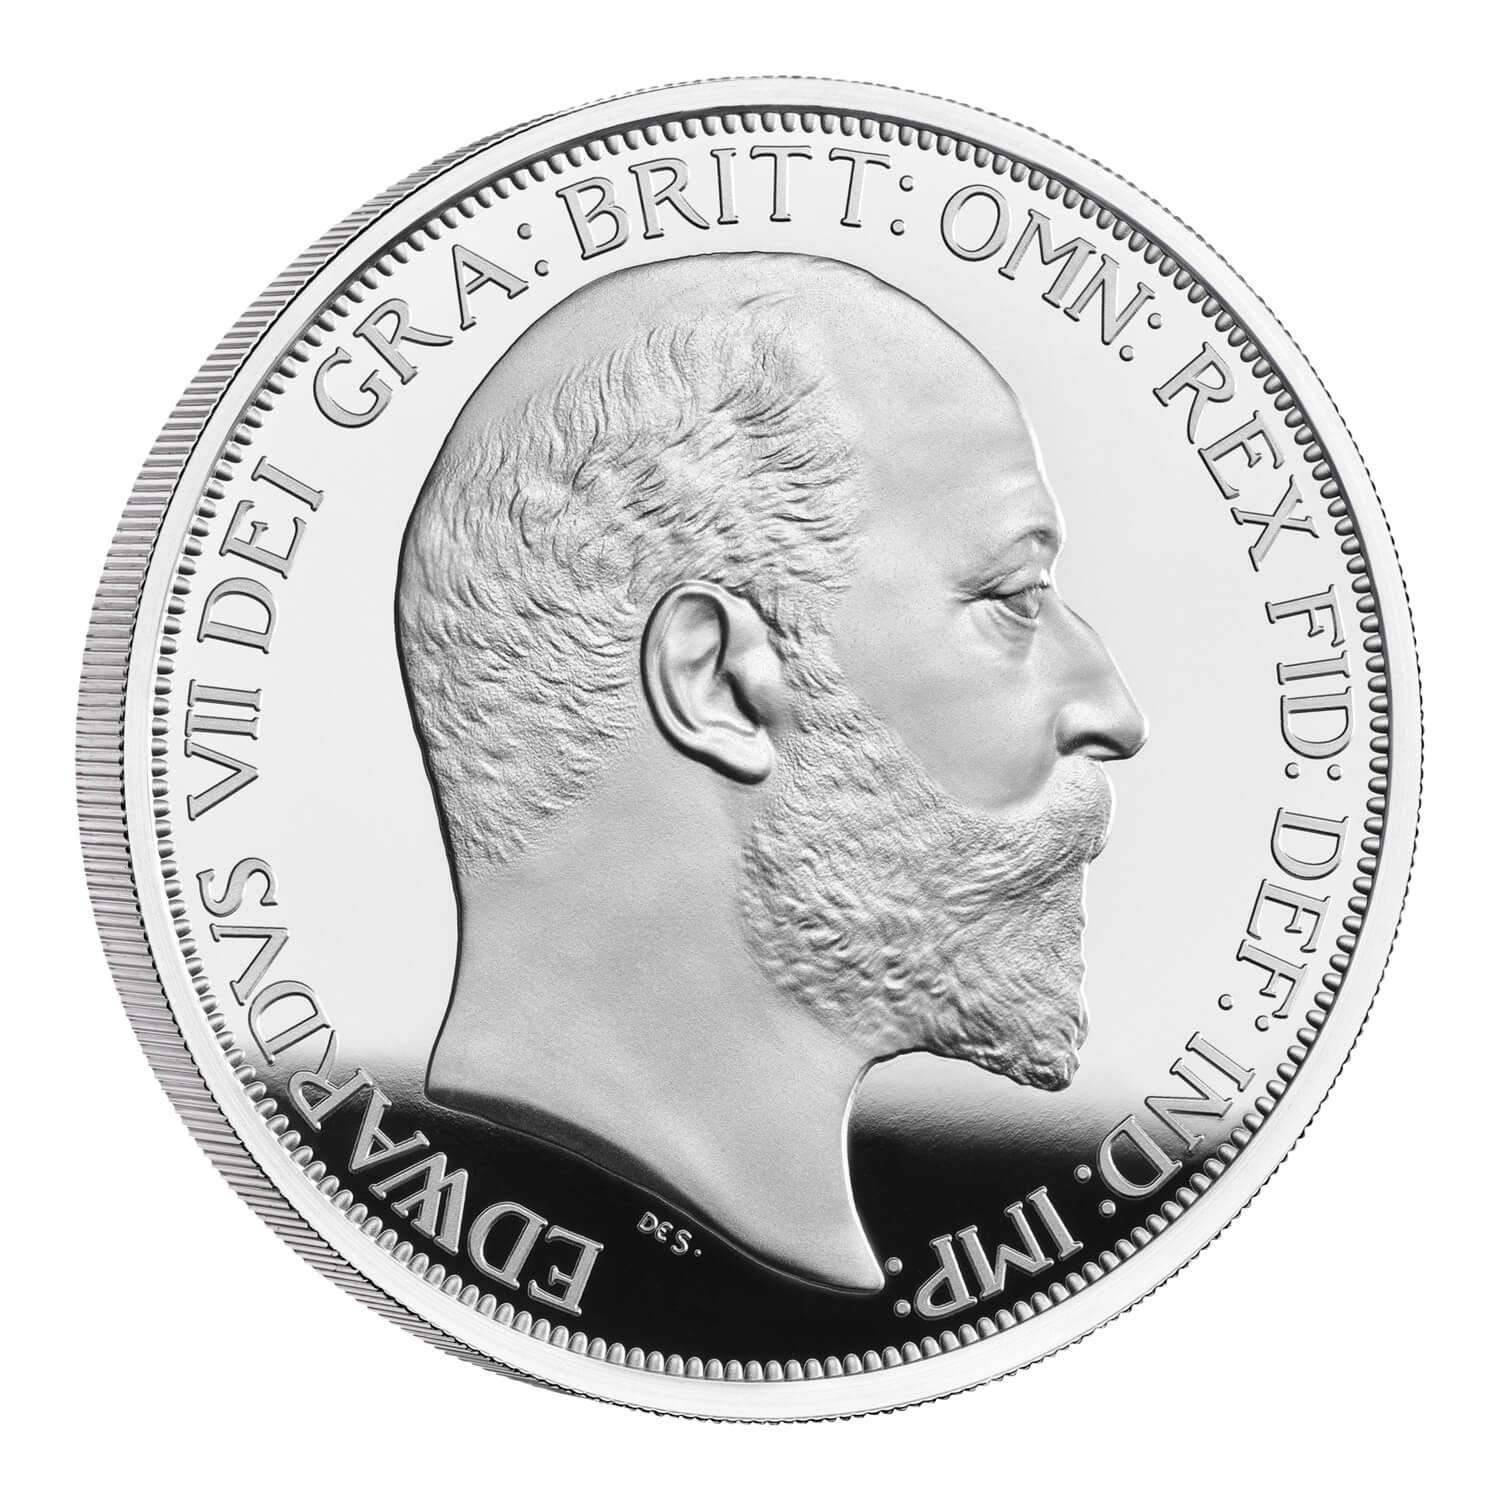 (W185.10.P.2022.UK22E7S5O) 10 Pounds UK 2022 5 oz Proof silver - King Edward VII Reverse (zoom)